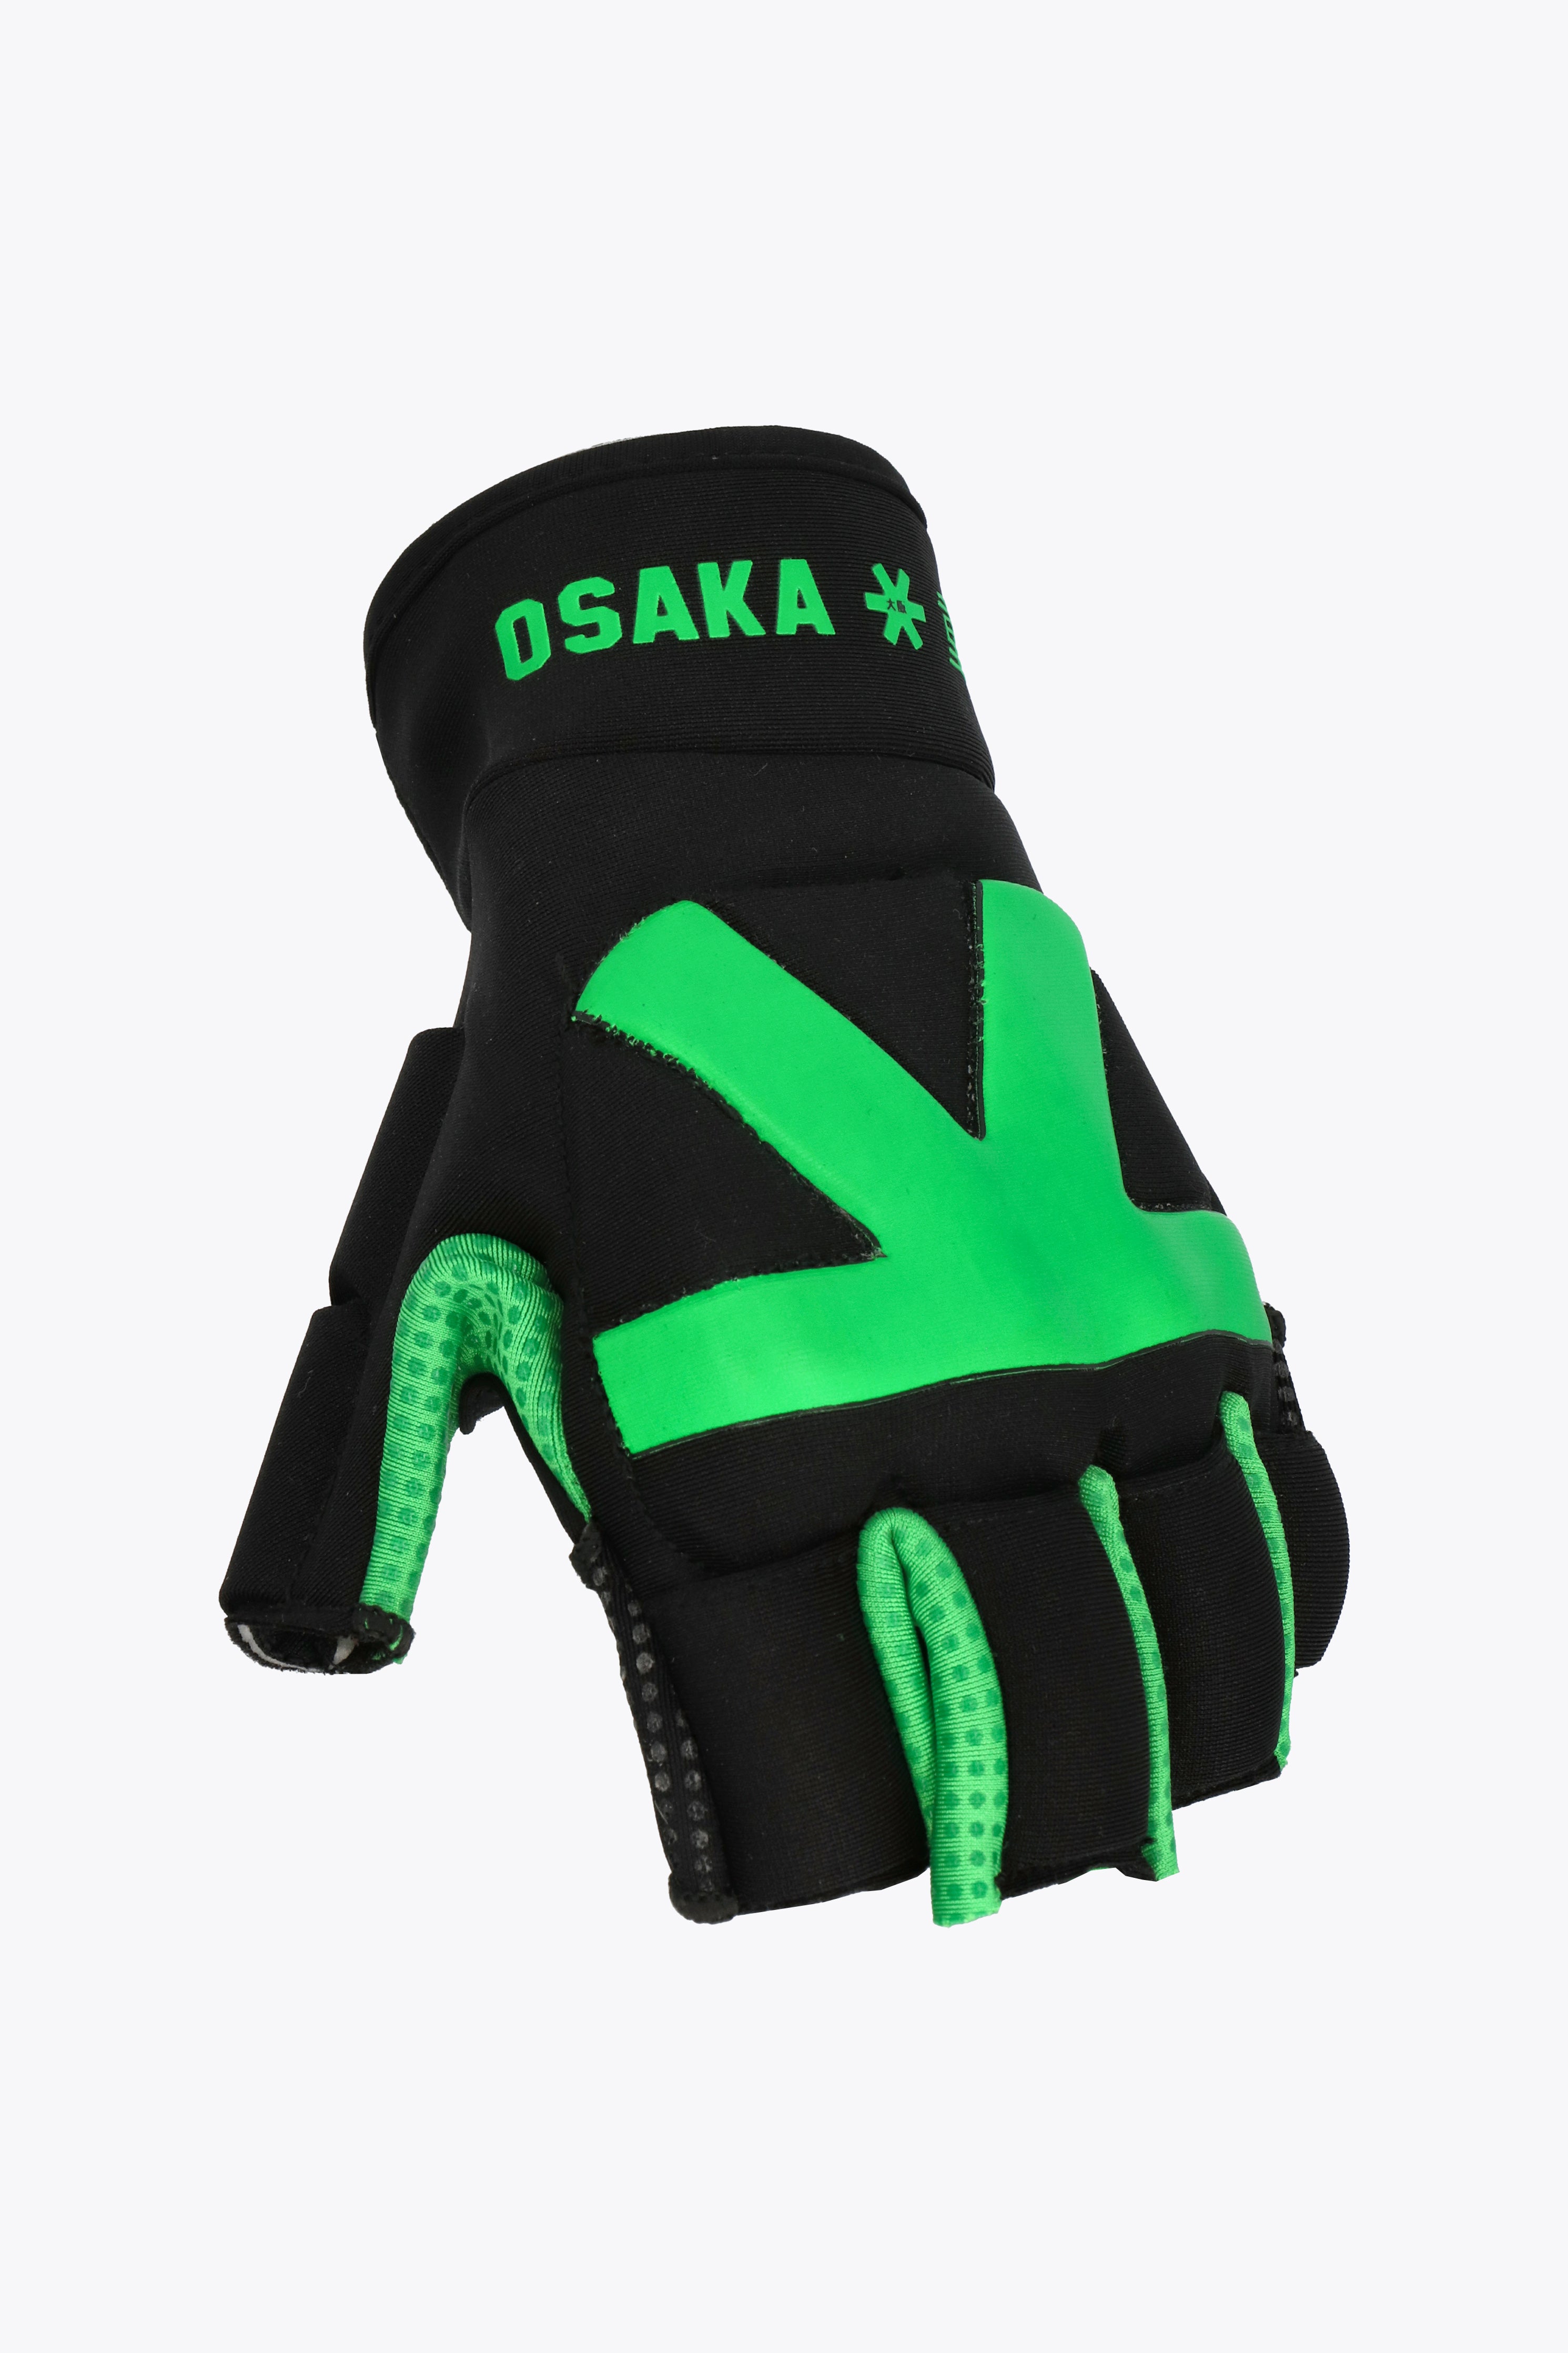 Osaka Hockeyhandschoenen｜Osakaworld.com Osaka World